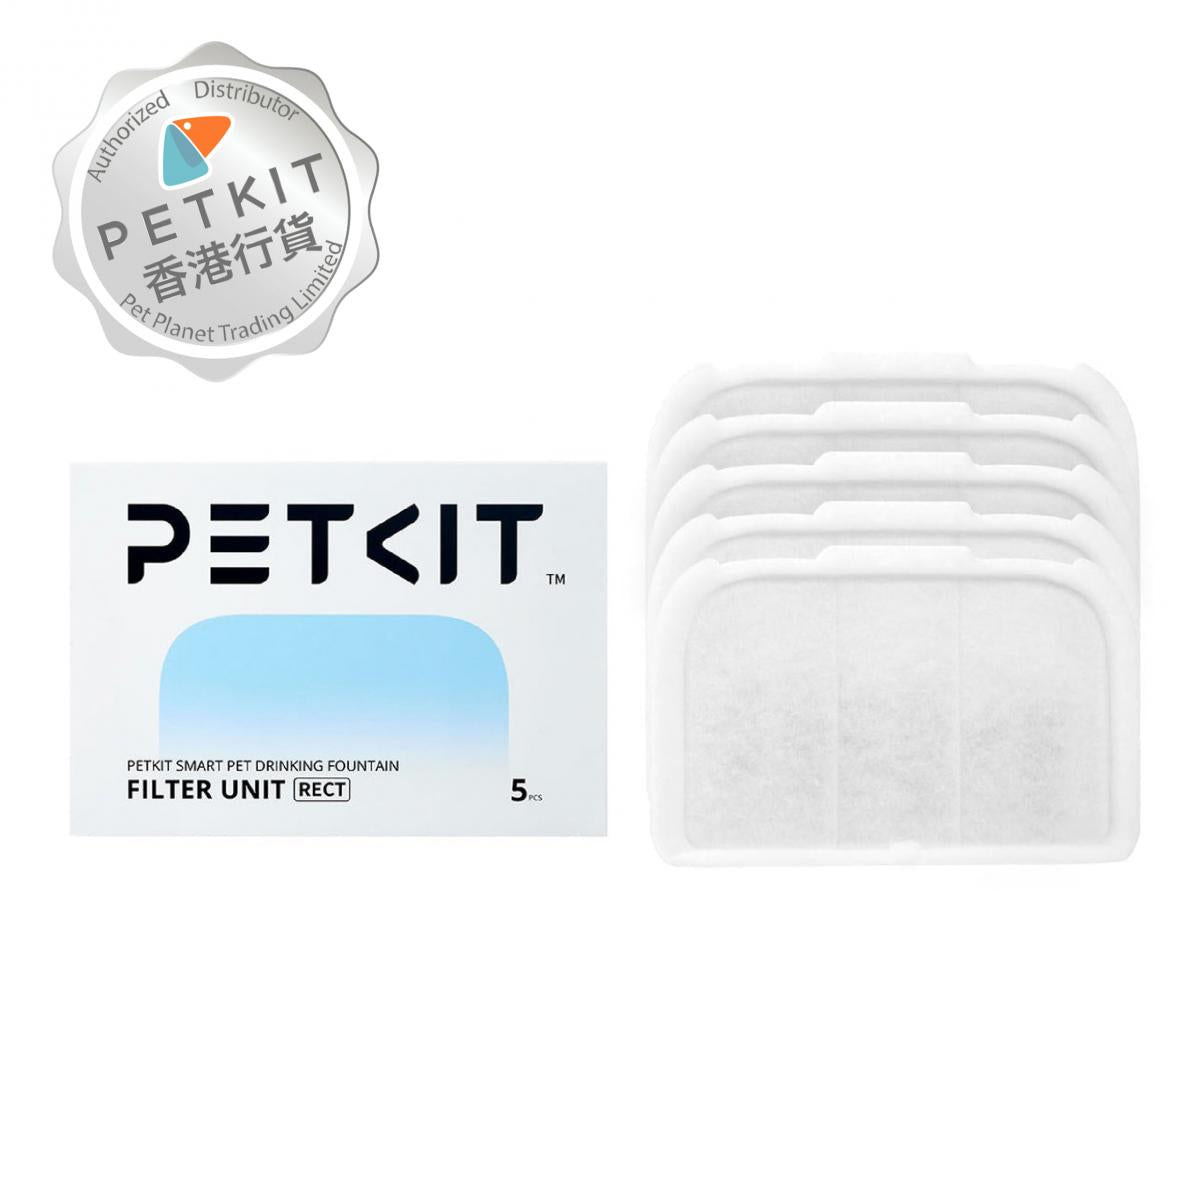 PETKIT - Eversweet Max 無線智能飲水機 + 濾芯套裝 （香港原裝行貨）